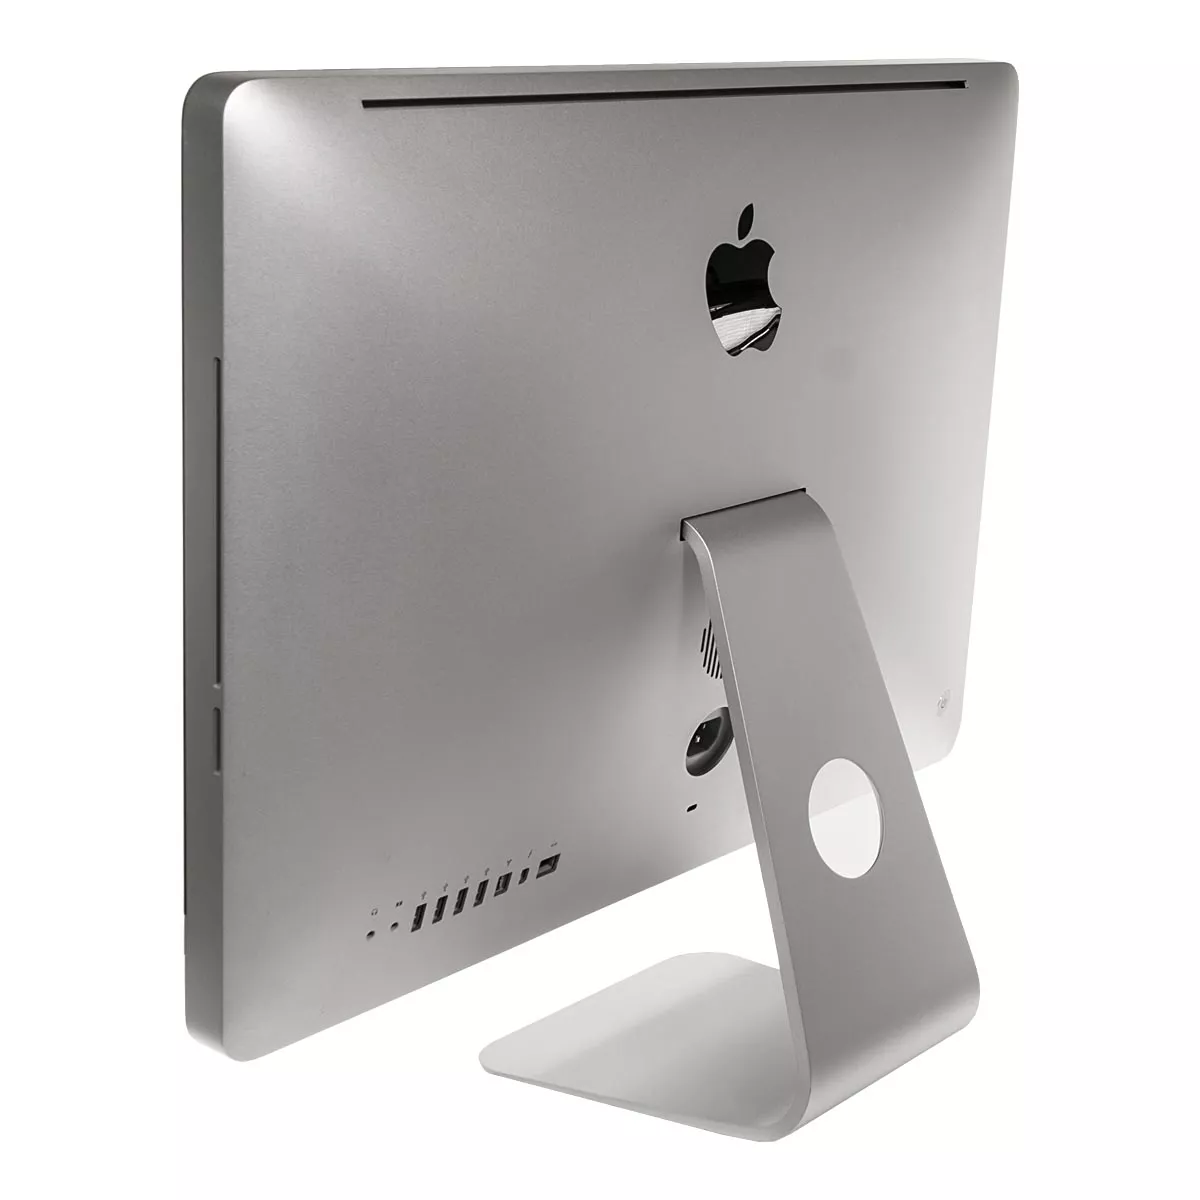 Apple iMac A1312 27 Zoll Core i7 2600 3,40 GHz Webcam